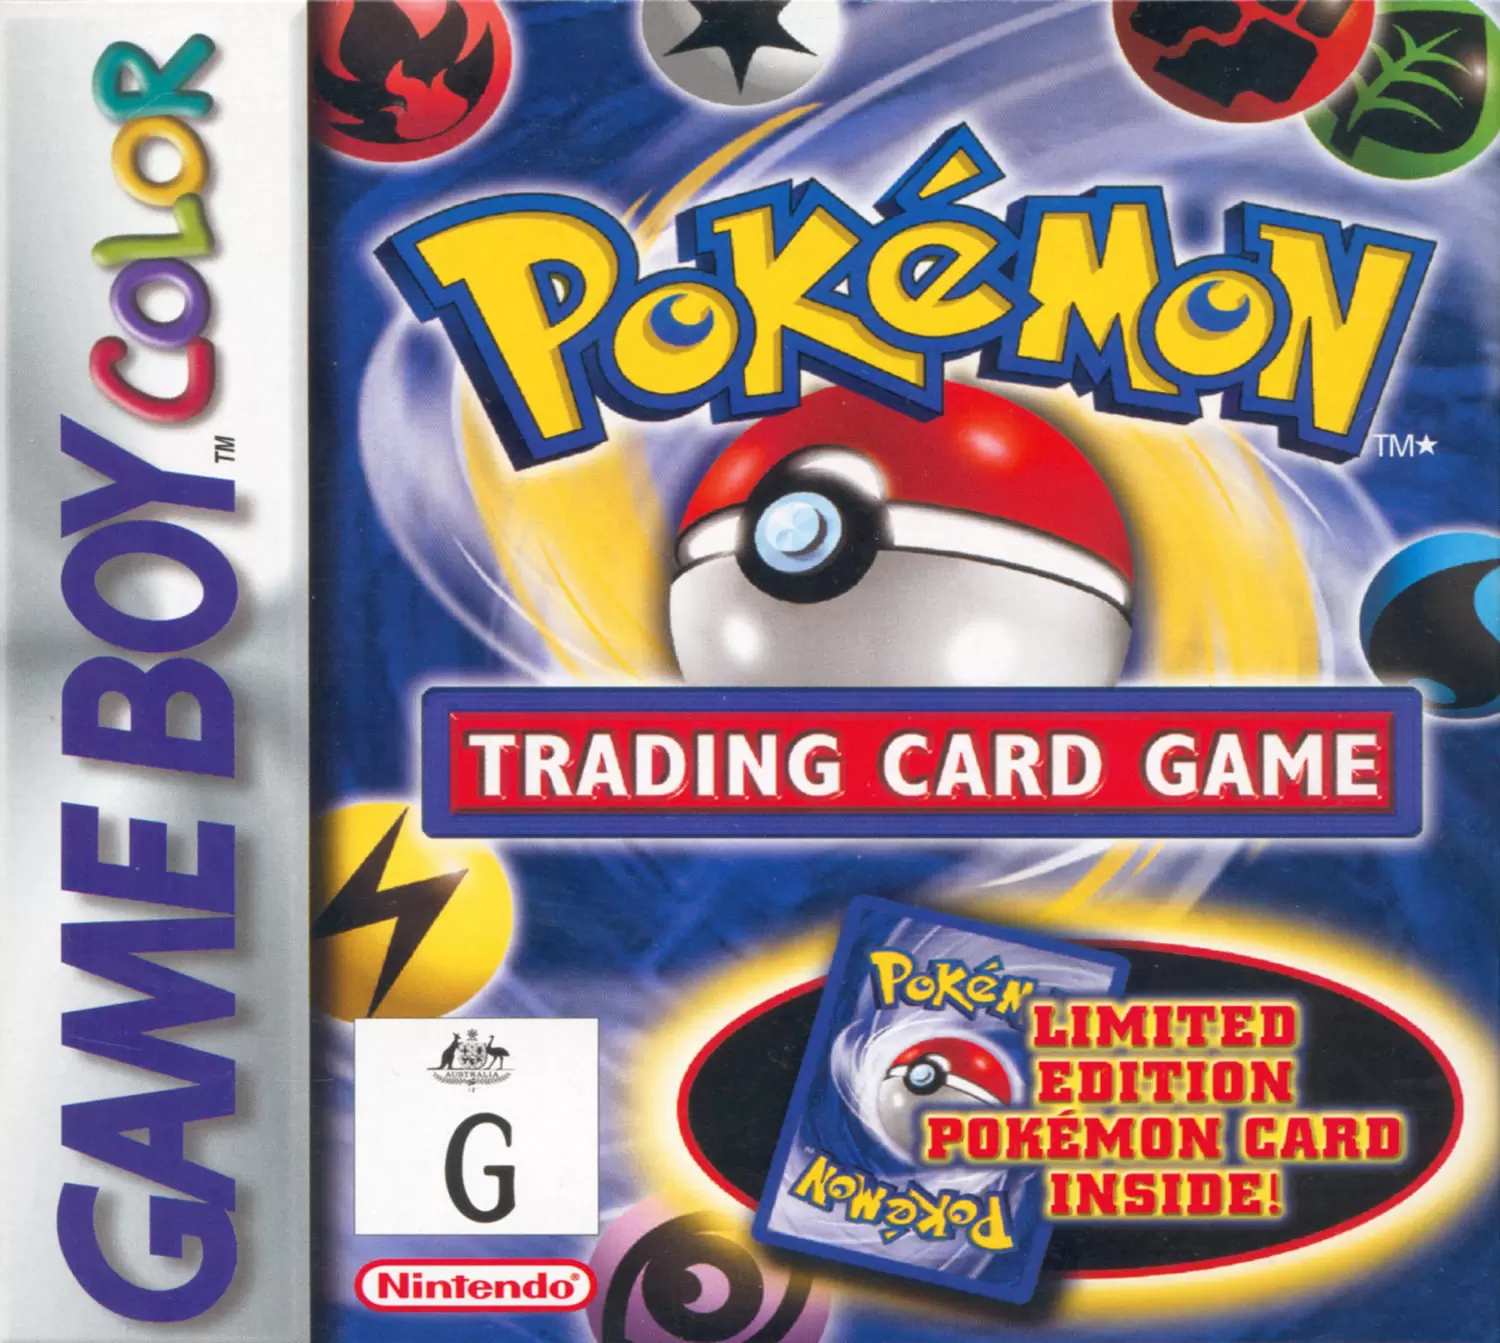 Game Boy Color Games - Pokémon Trading Card Game